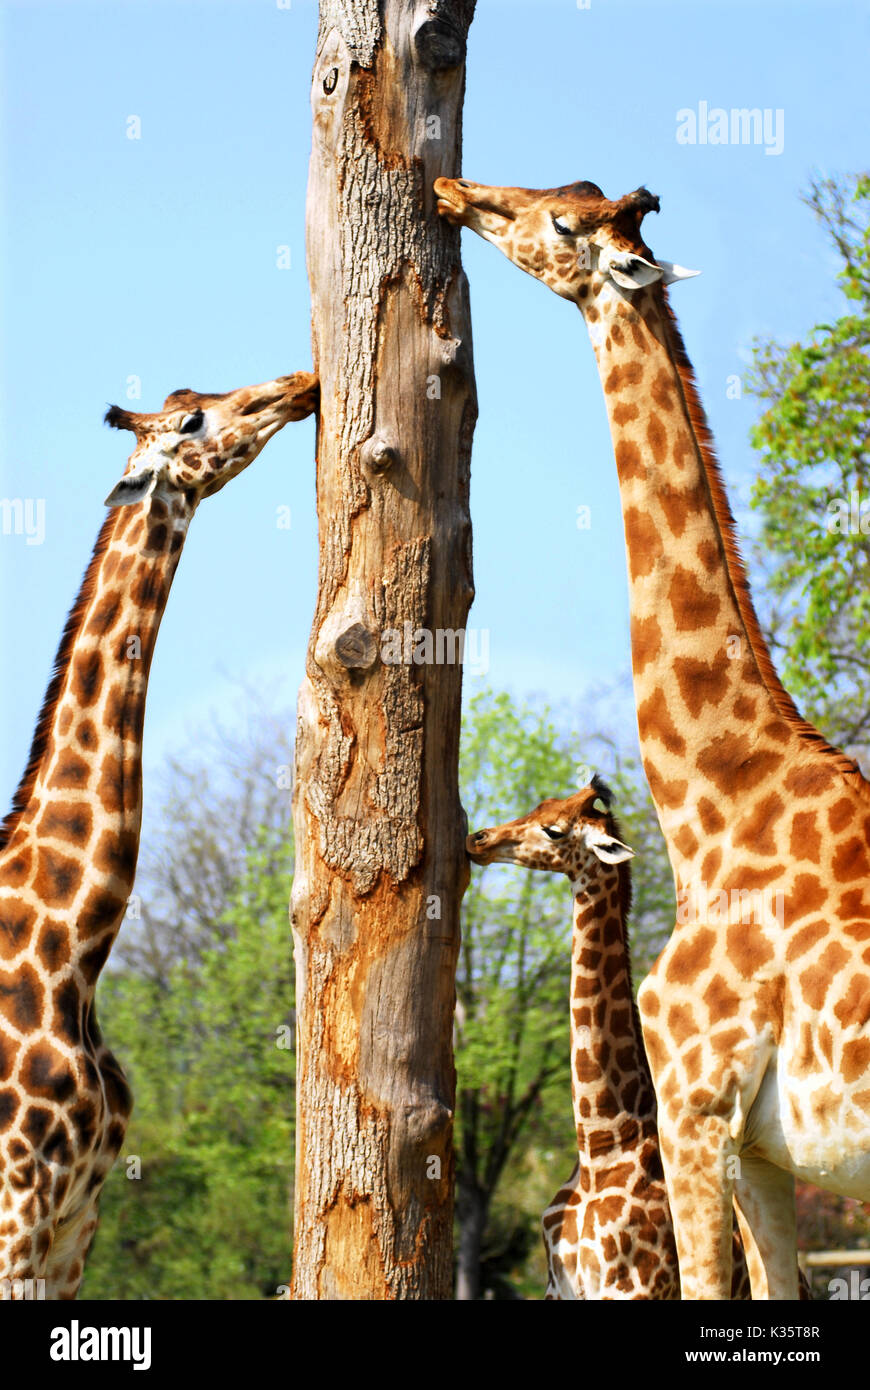 Closeup of three giraffes (Giraffa camelopardalis) near of trunk tree Stock Photo